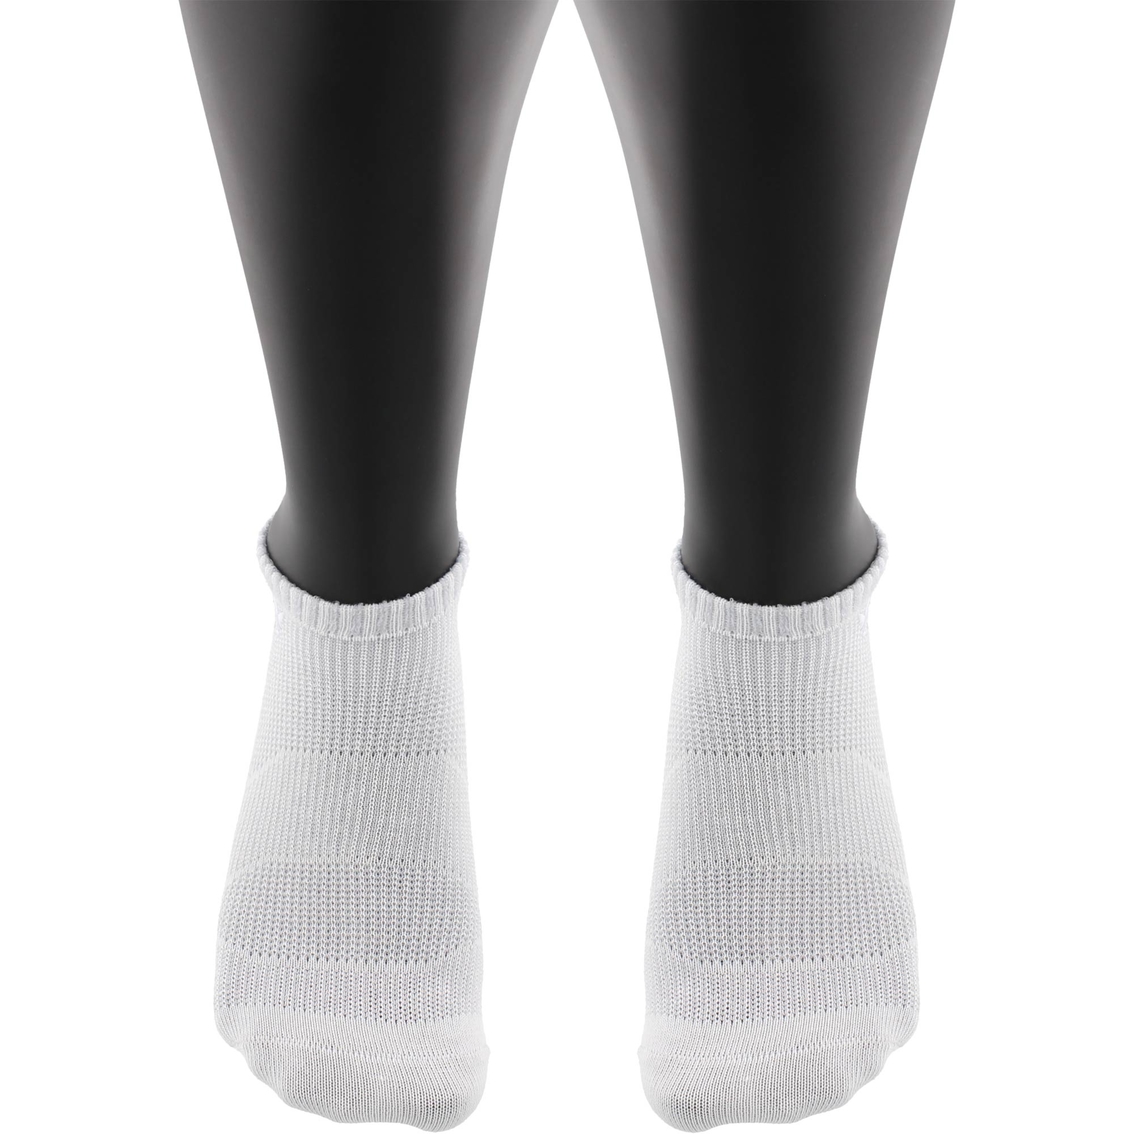 Adidas Men's Original Prime Mesh II No Show Socks 3 Pk. - Image 3 of 4